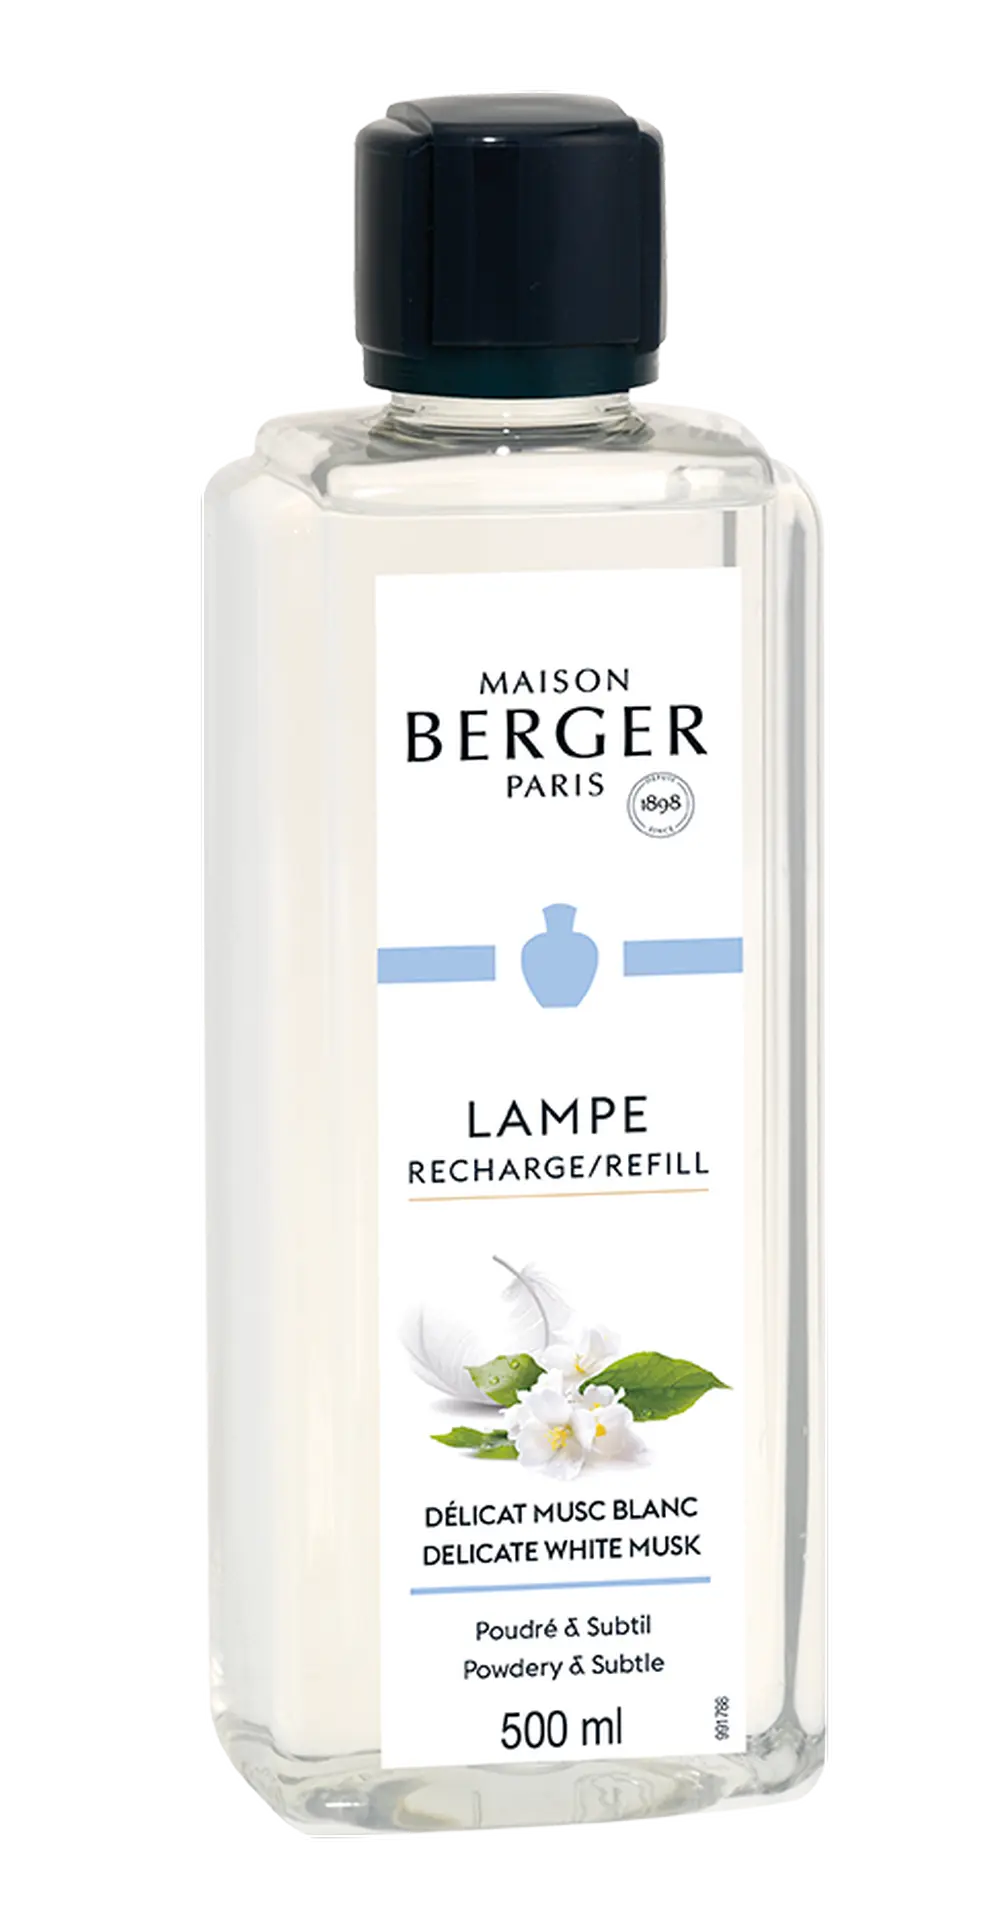 MAISON BERGER PARIS - Delicate White Musk – Lampe Berger Duft 500 ml - Delikater Weißer Moschus - Raumduft